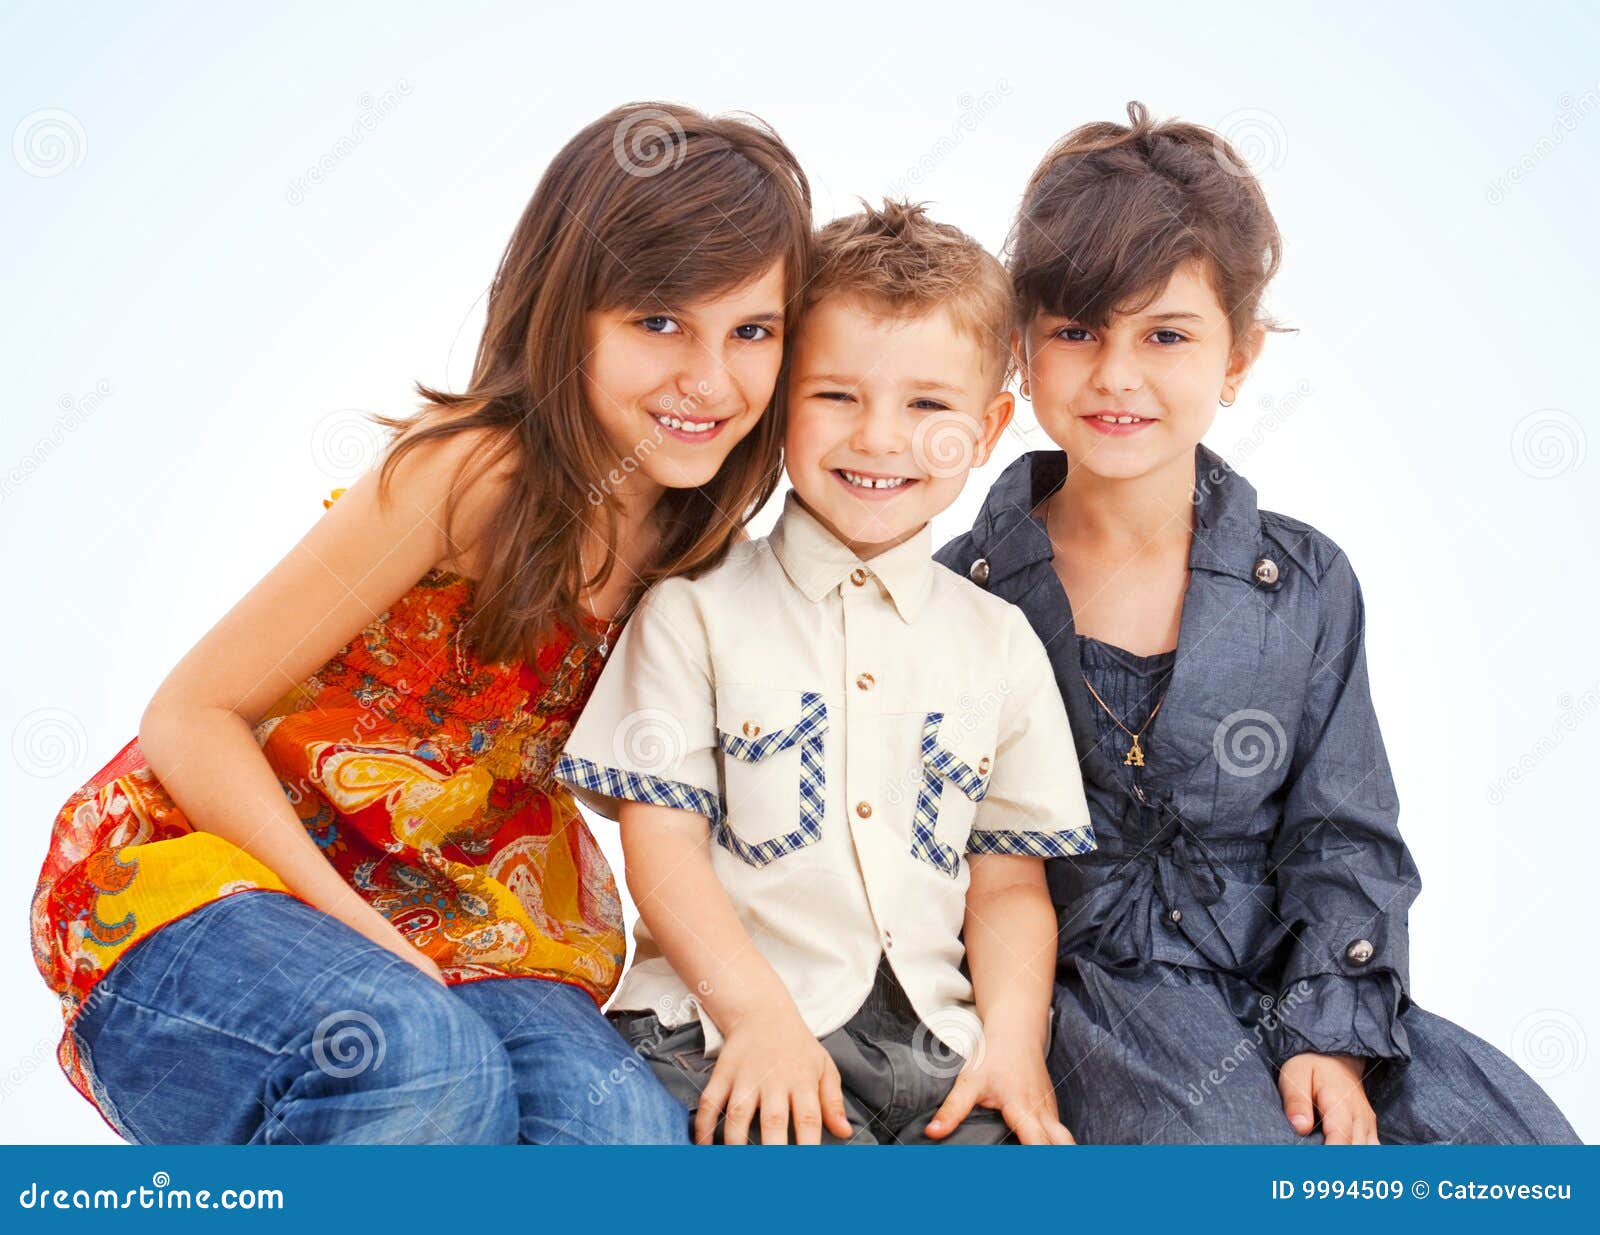 Children smiling stock image. Image of friendship, children - 9994509